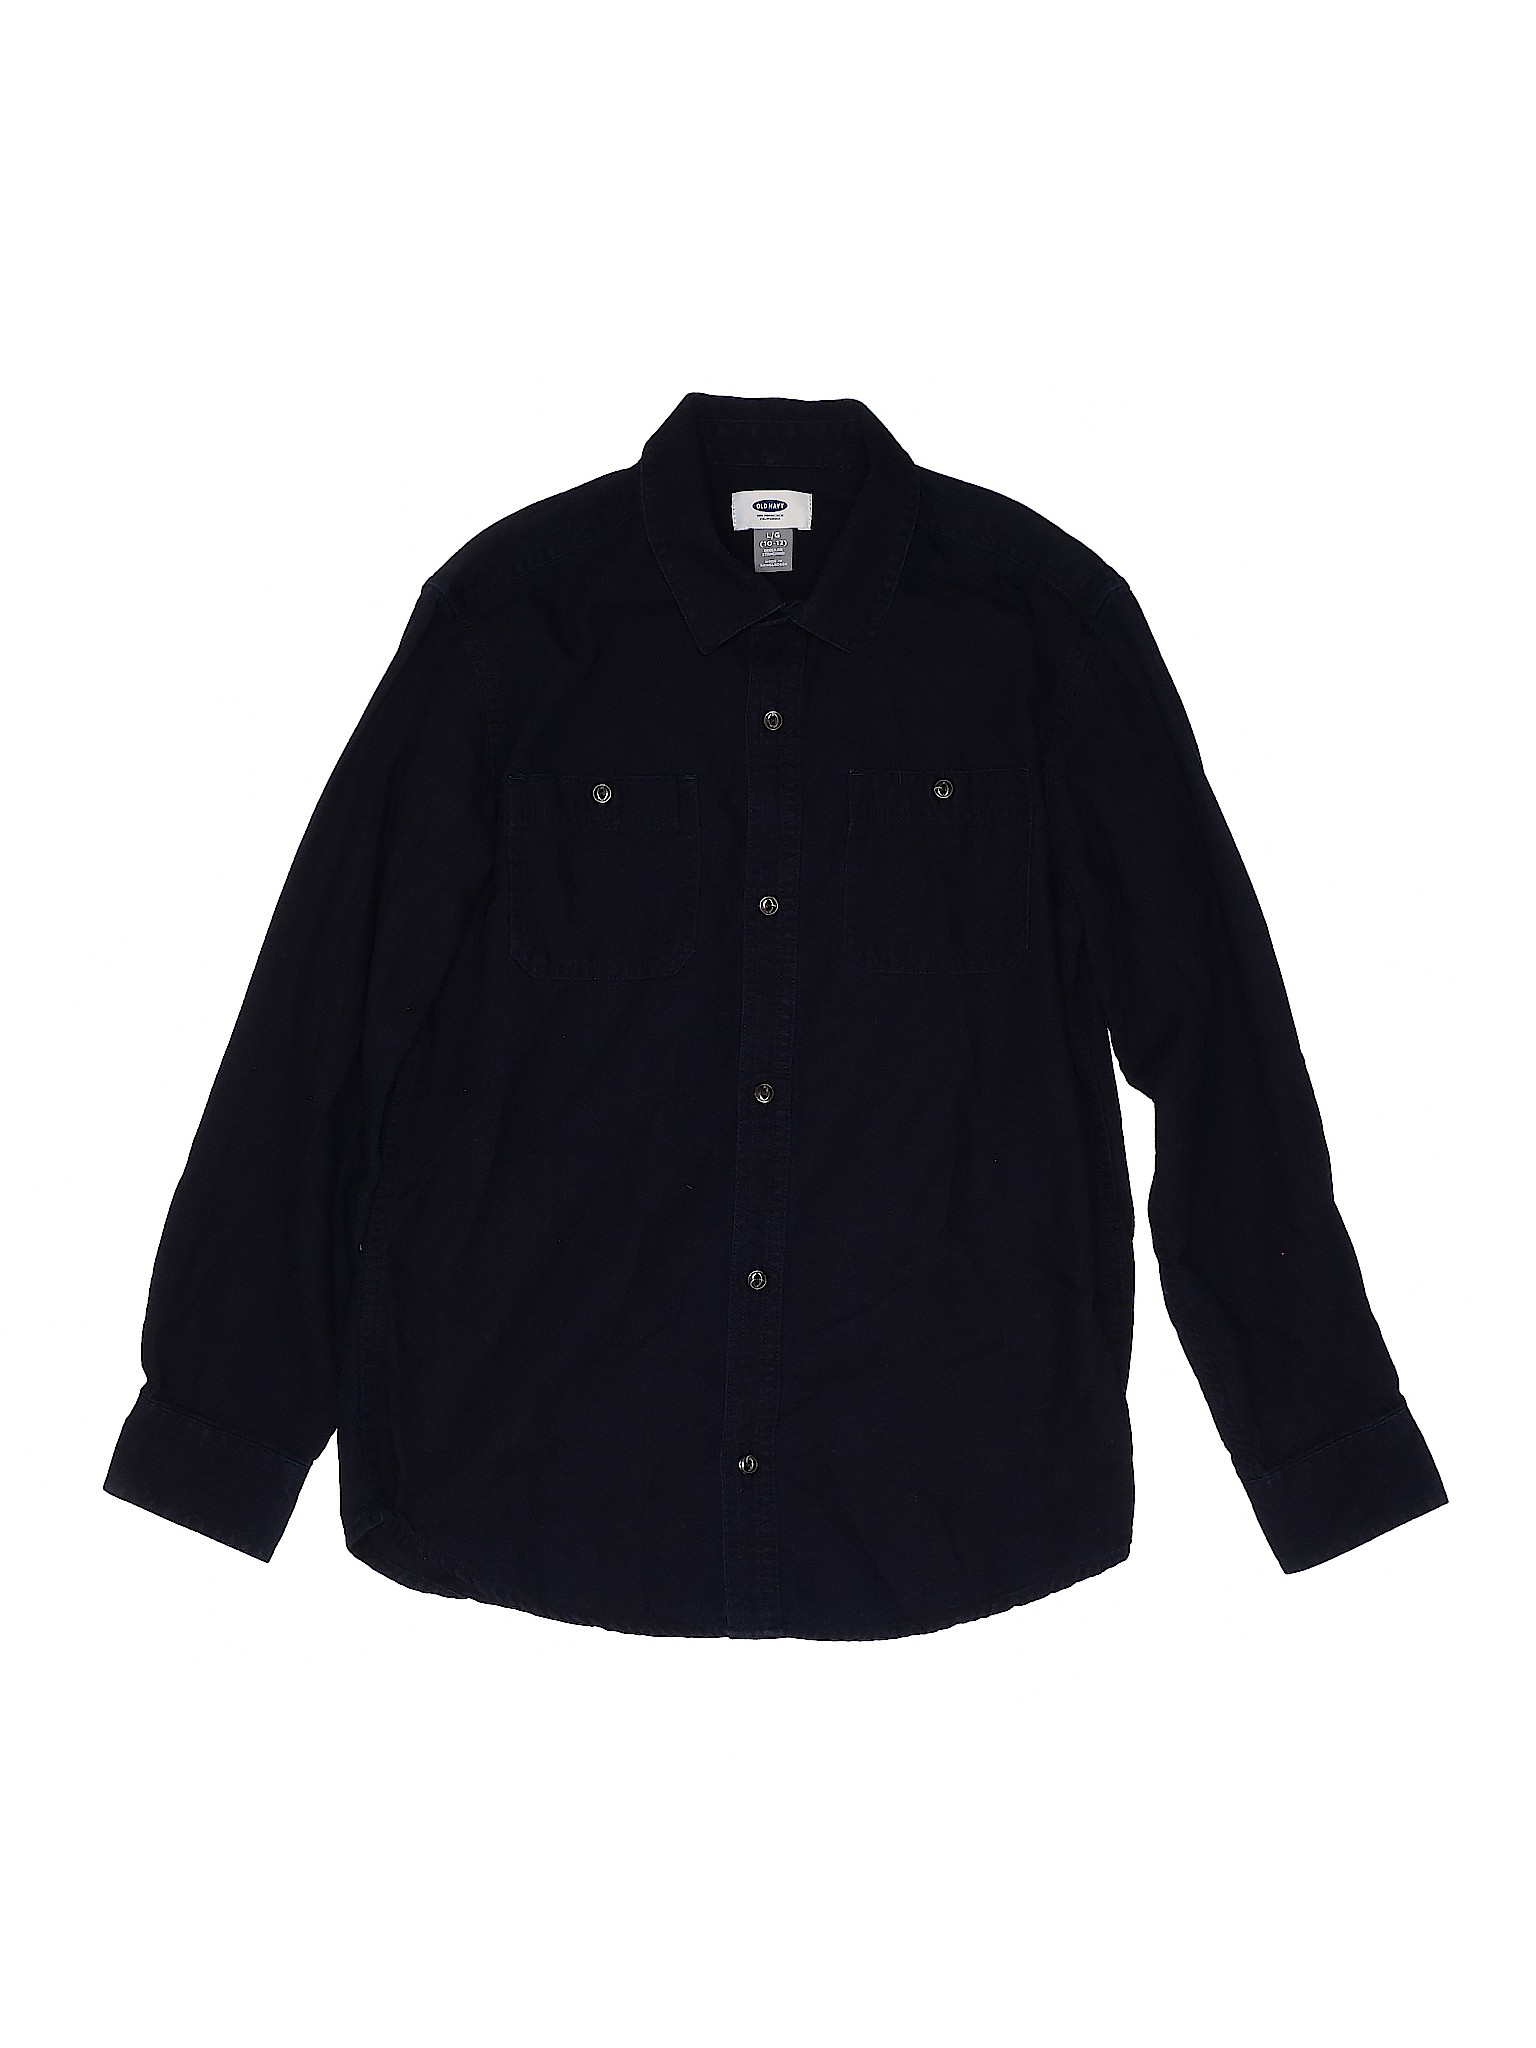 Old Navy Boys Blue Long Sleeve Button-Down Shirt 10 | eBay